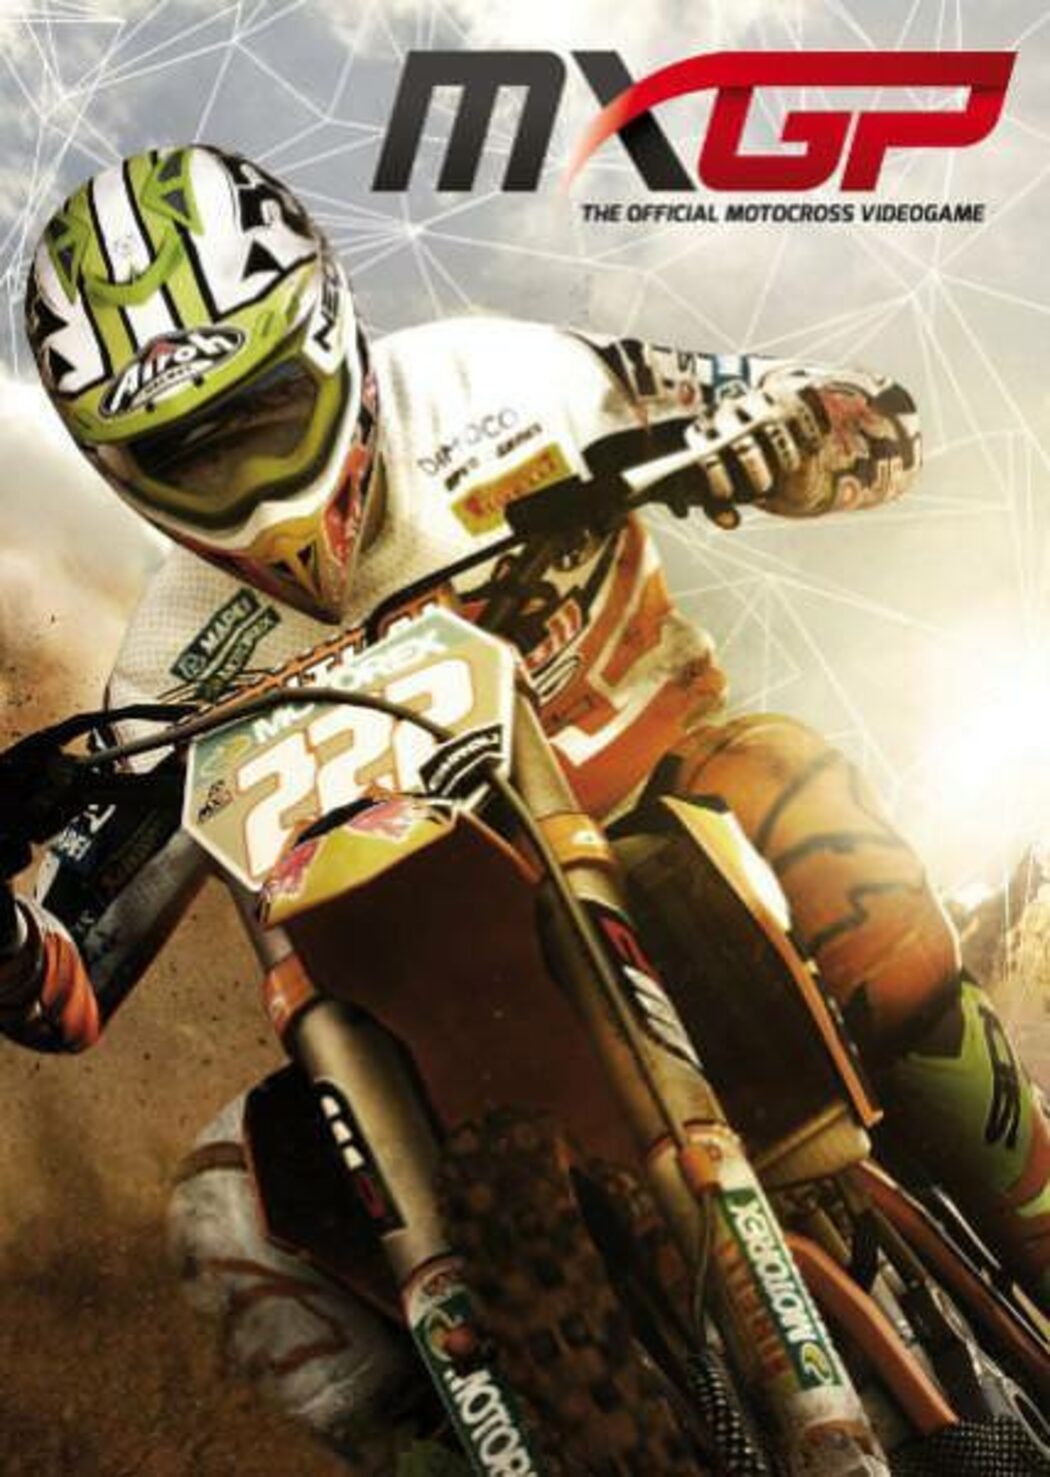 MXGP PRO: The Motocross Videogame! ENEBA